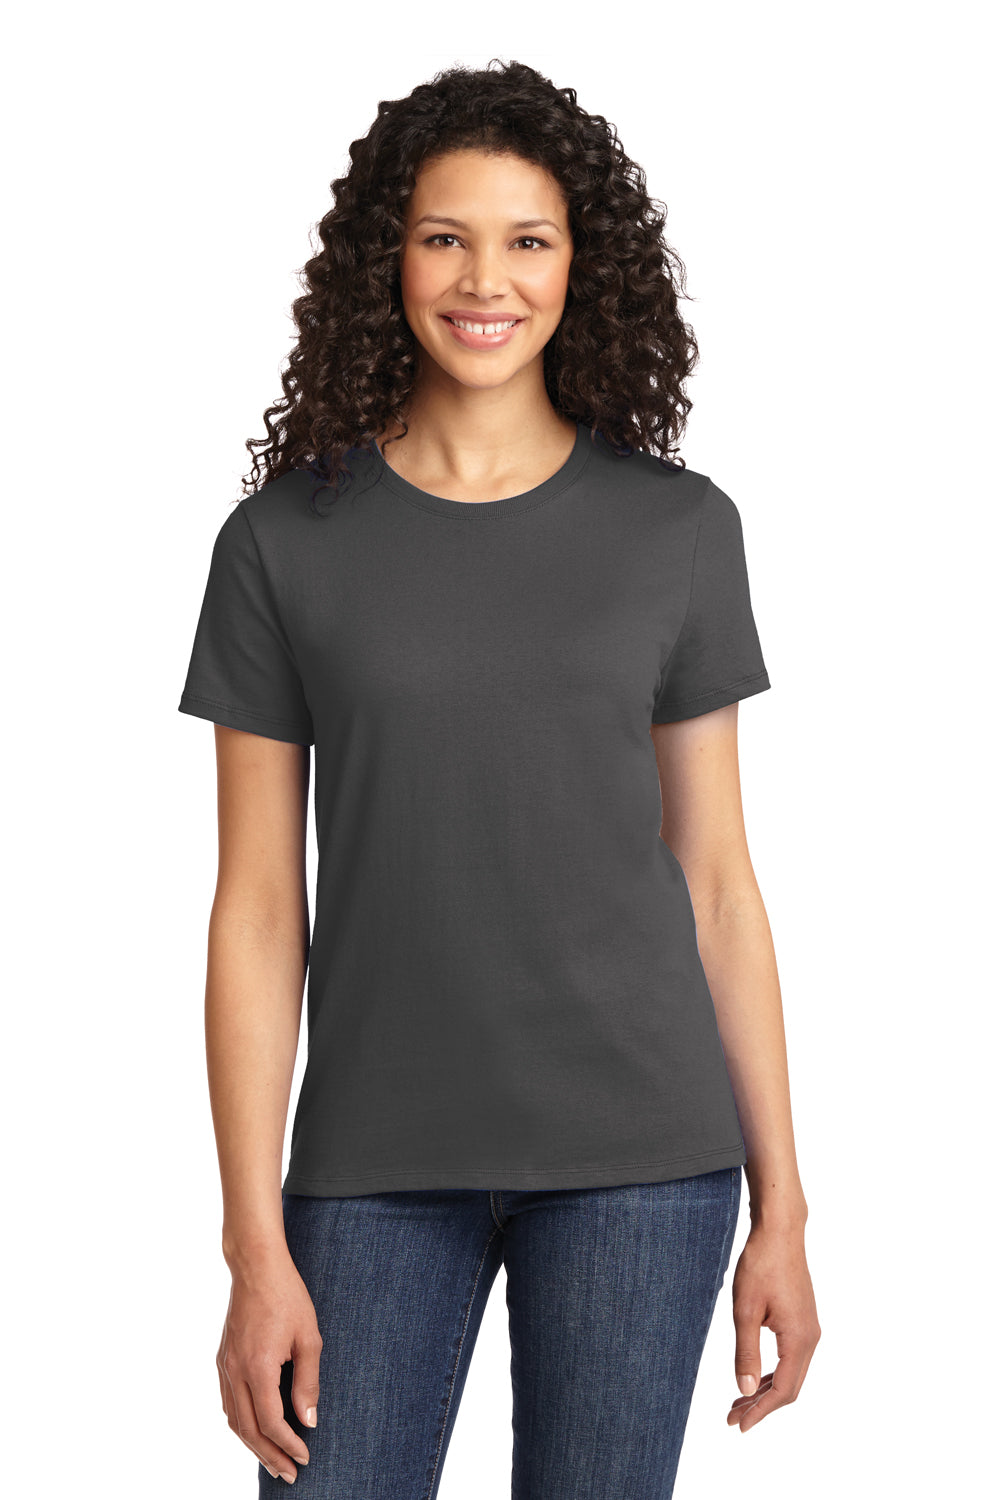 Port & Company LPC61 Womens Essential Short Sleeve Crewneck T-Shirt Charcoal Grey Front